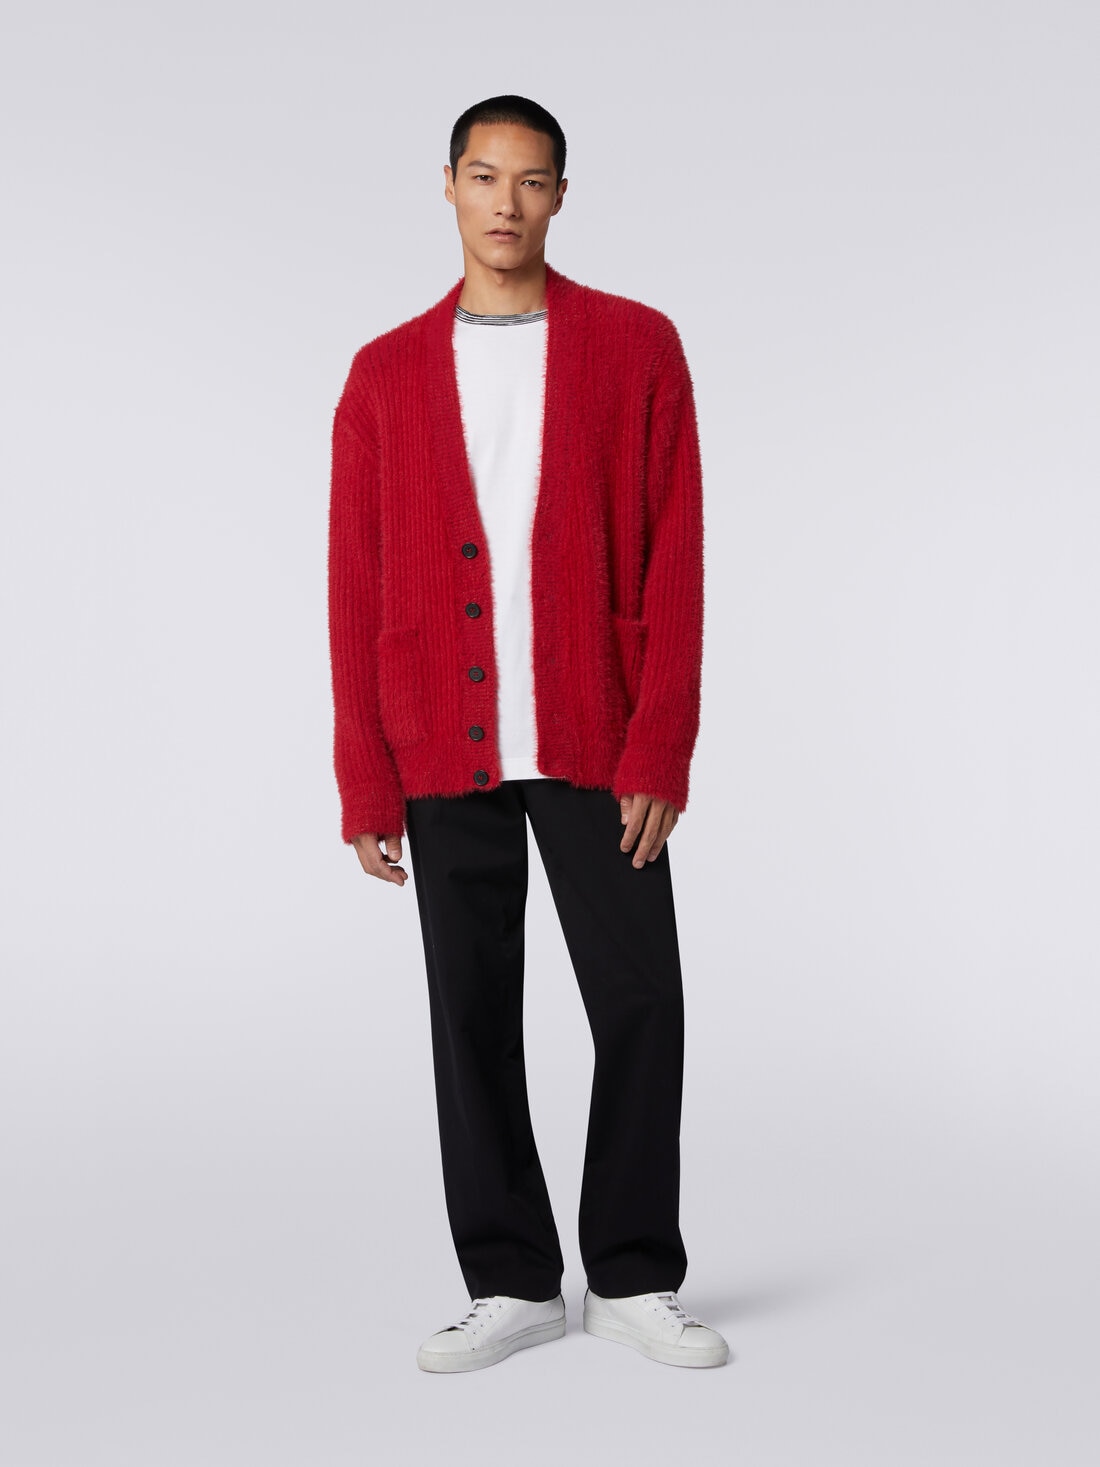 Oversized cardigan in fur-effect wool blend, Red  - US24SM0LBK026I91559 - 1